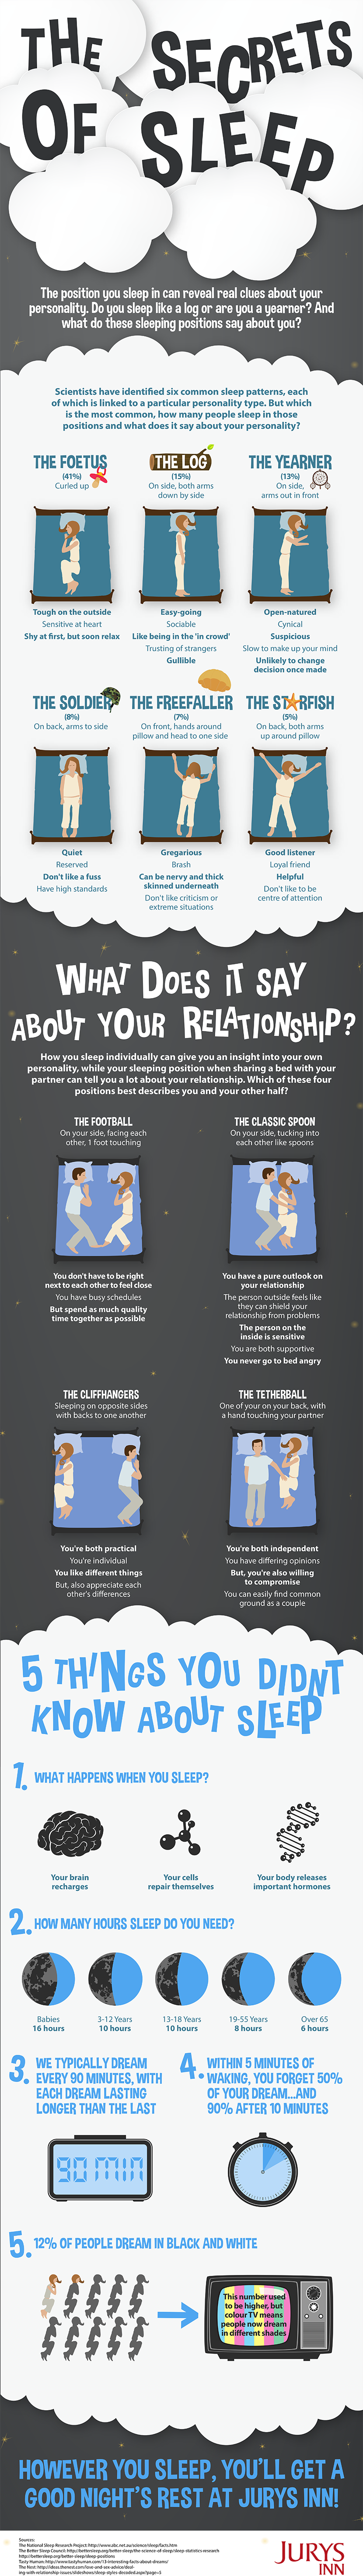 Infographic - The Secrets of Sleep